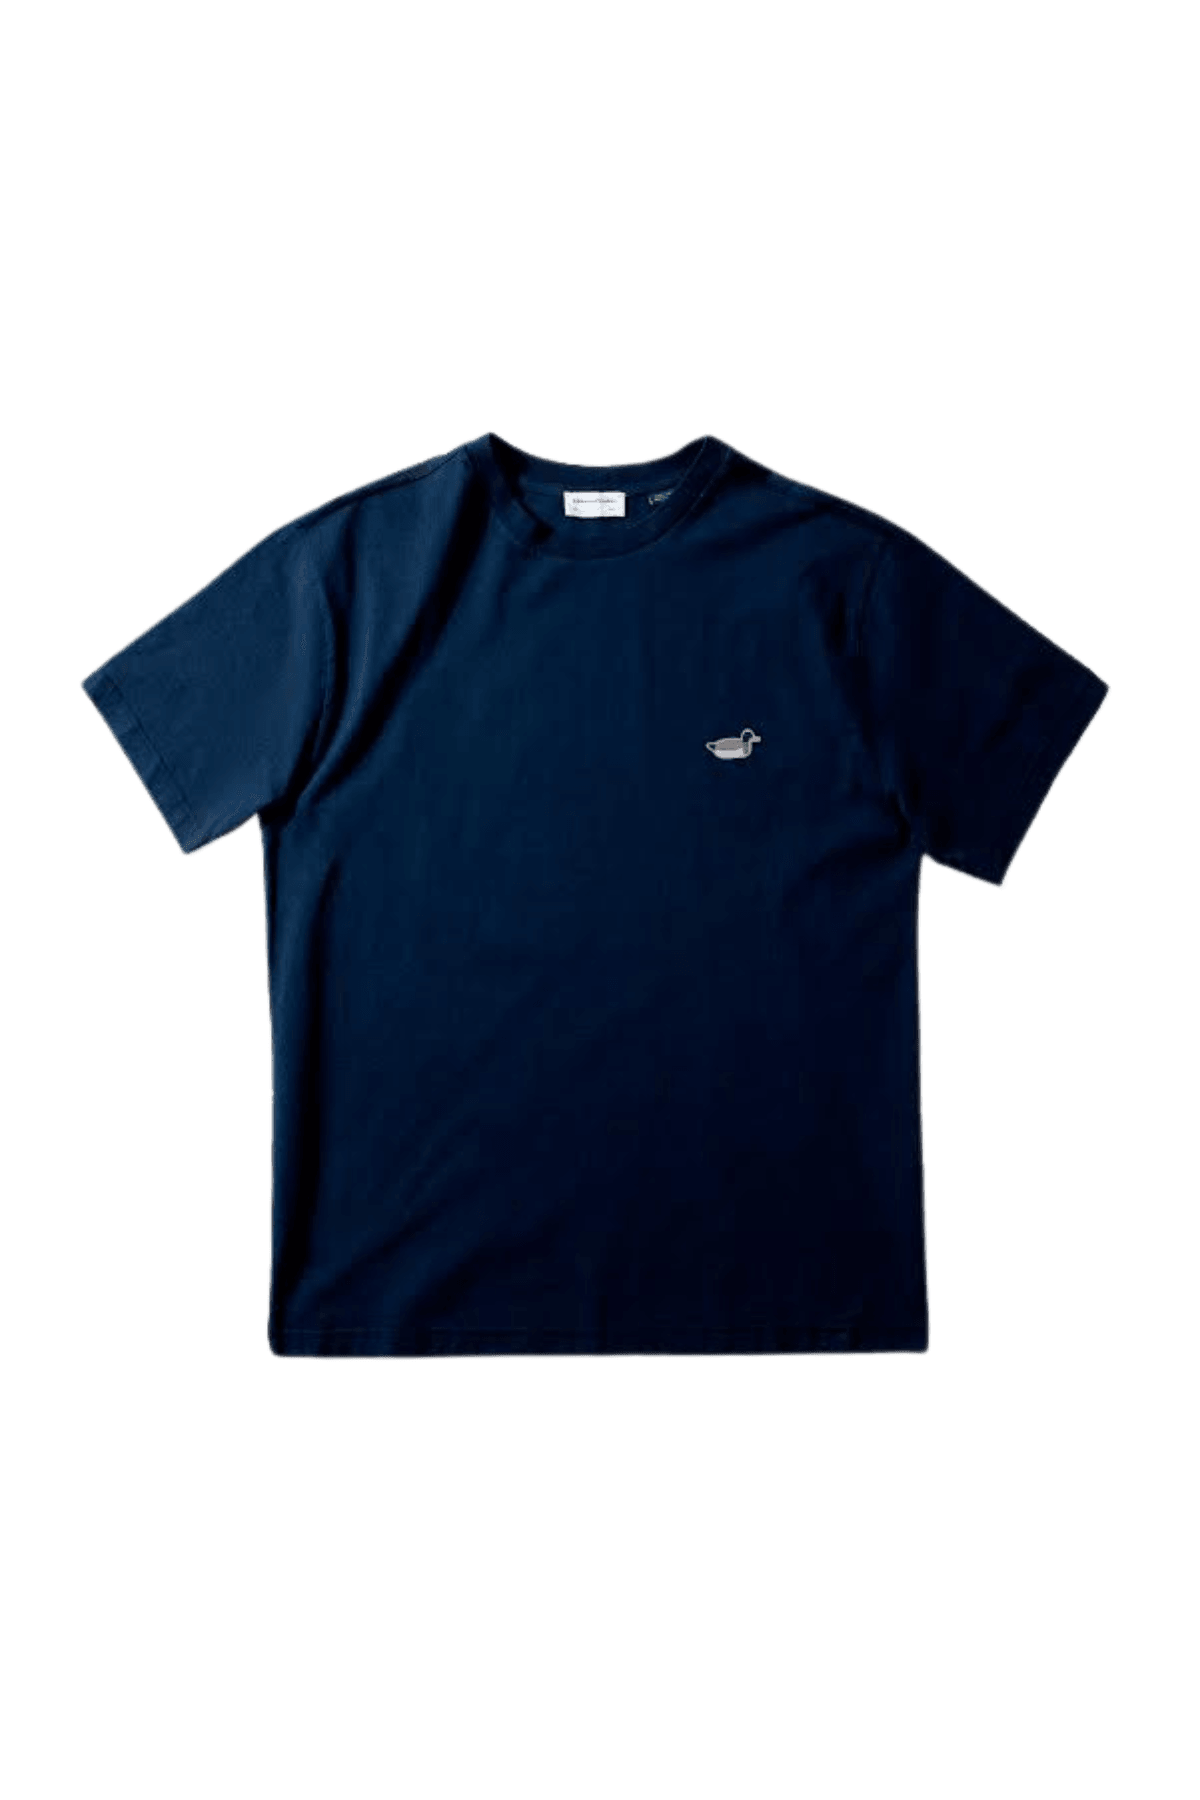 Camiseta Edmmond Studios Duck Patch Azul - ECRU